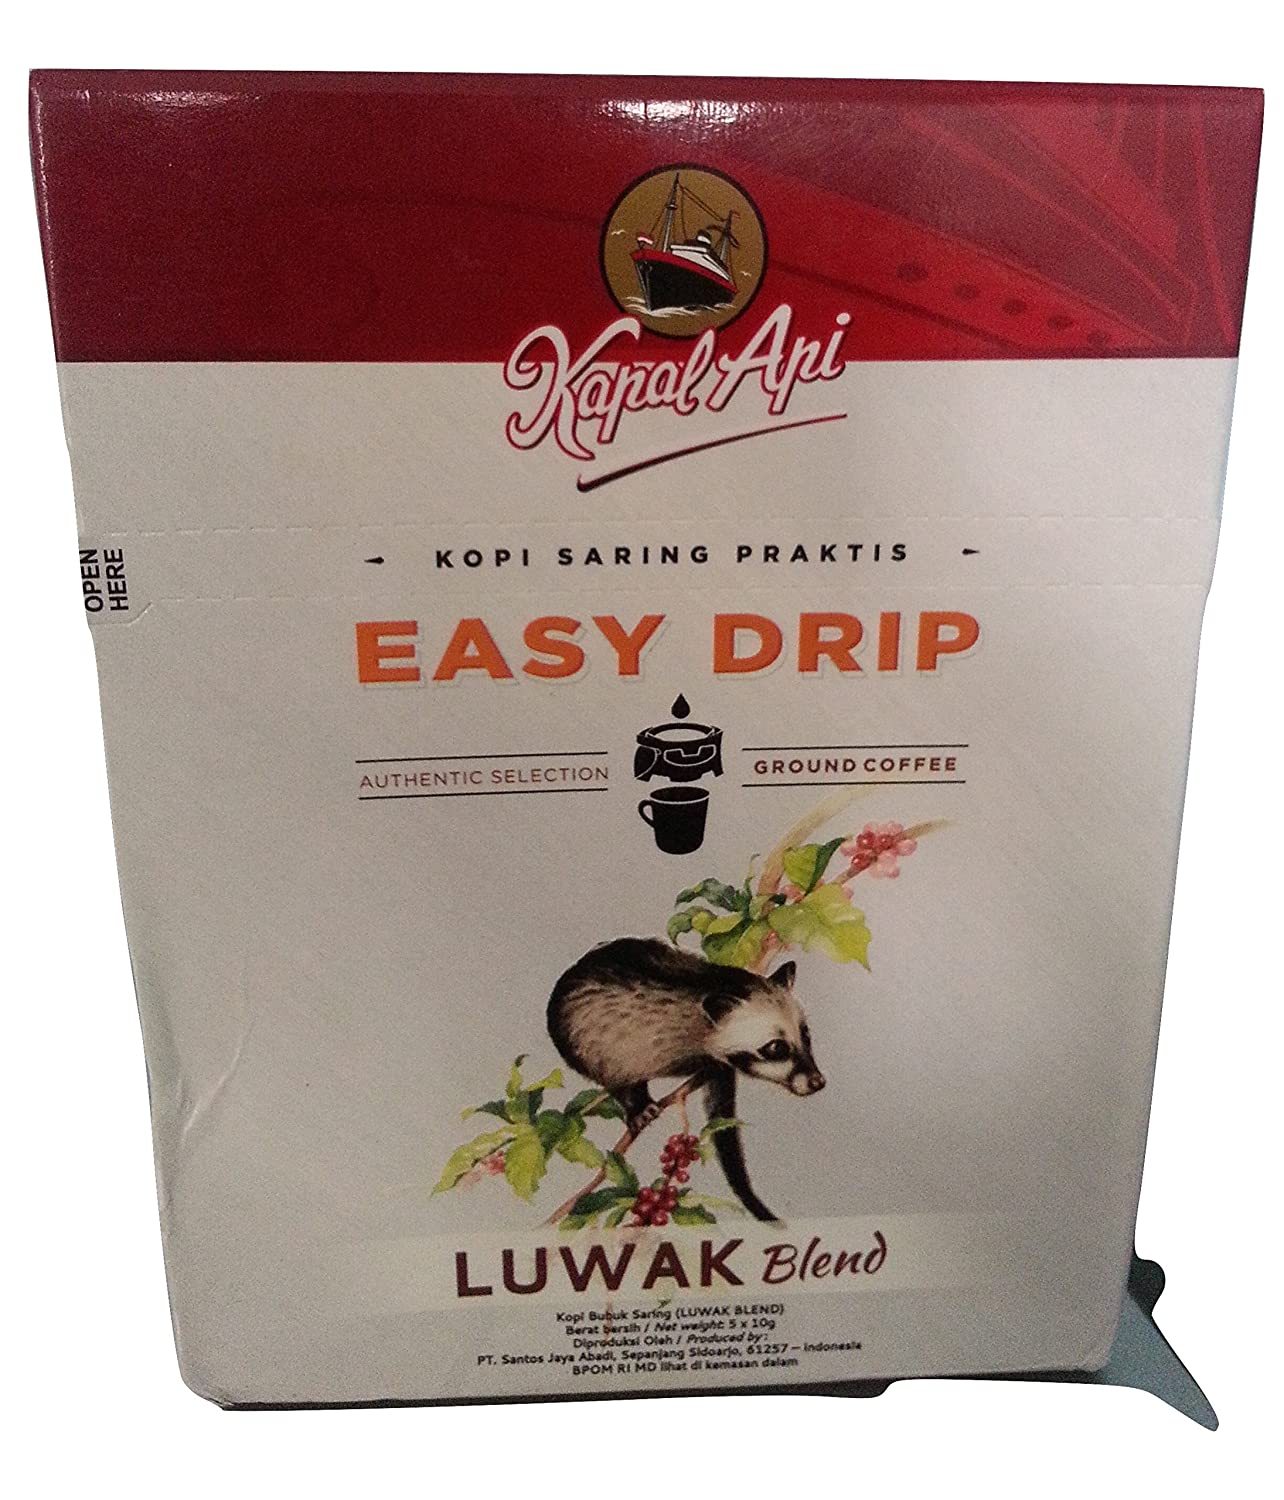 Kapal Api Easy Drip Tana Toraja Luwak Blend 5-ct, 50 Gram (Pack of 10)